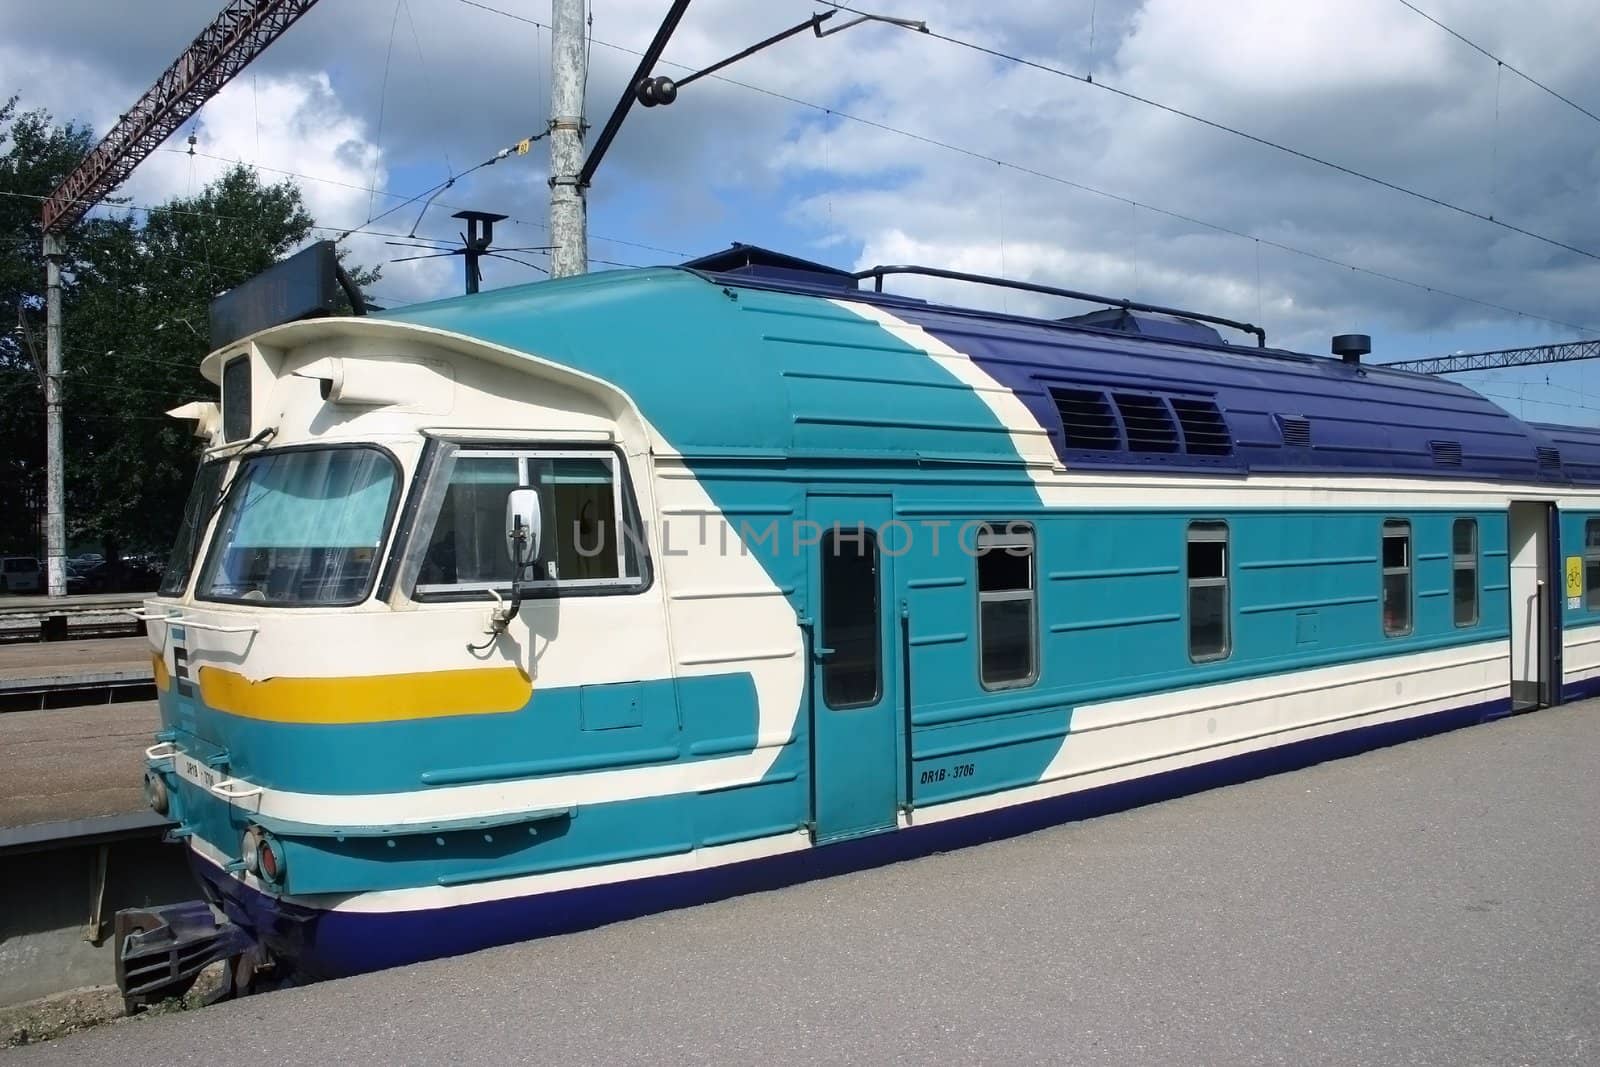 Electric train, the passenger locomotive at station by AlexandrePavlov